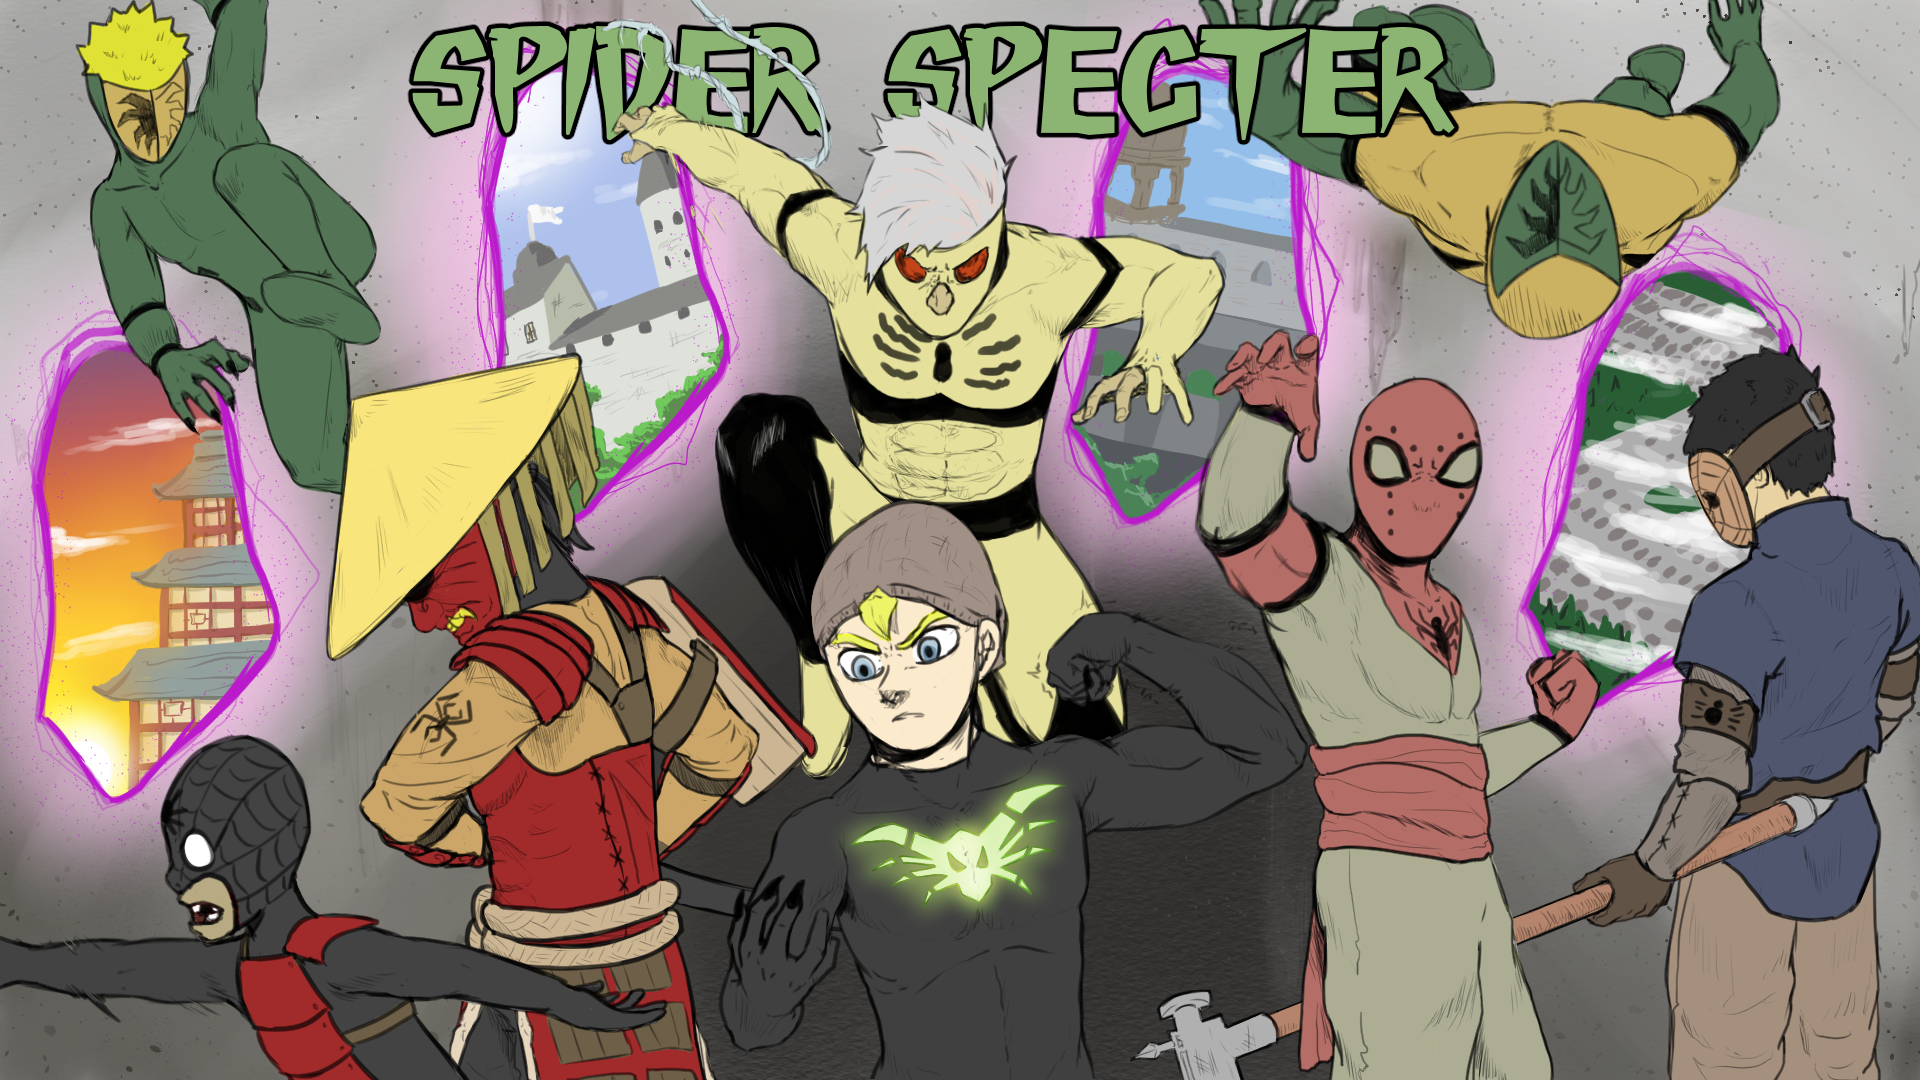 Spider Specter